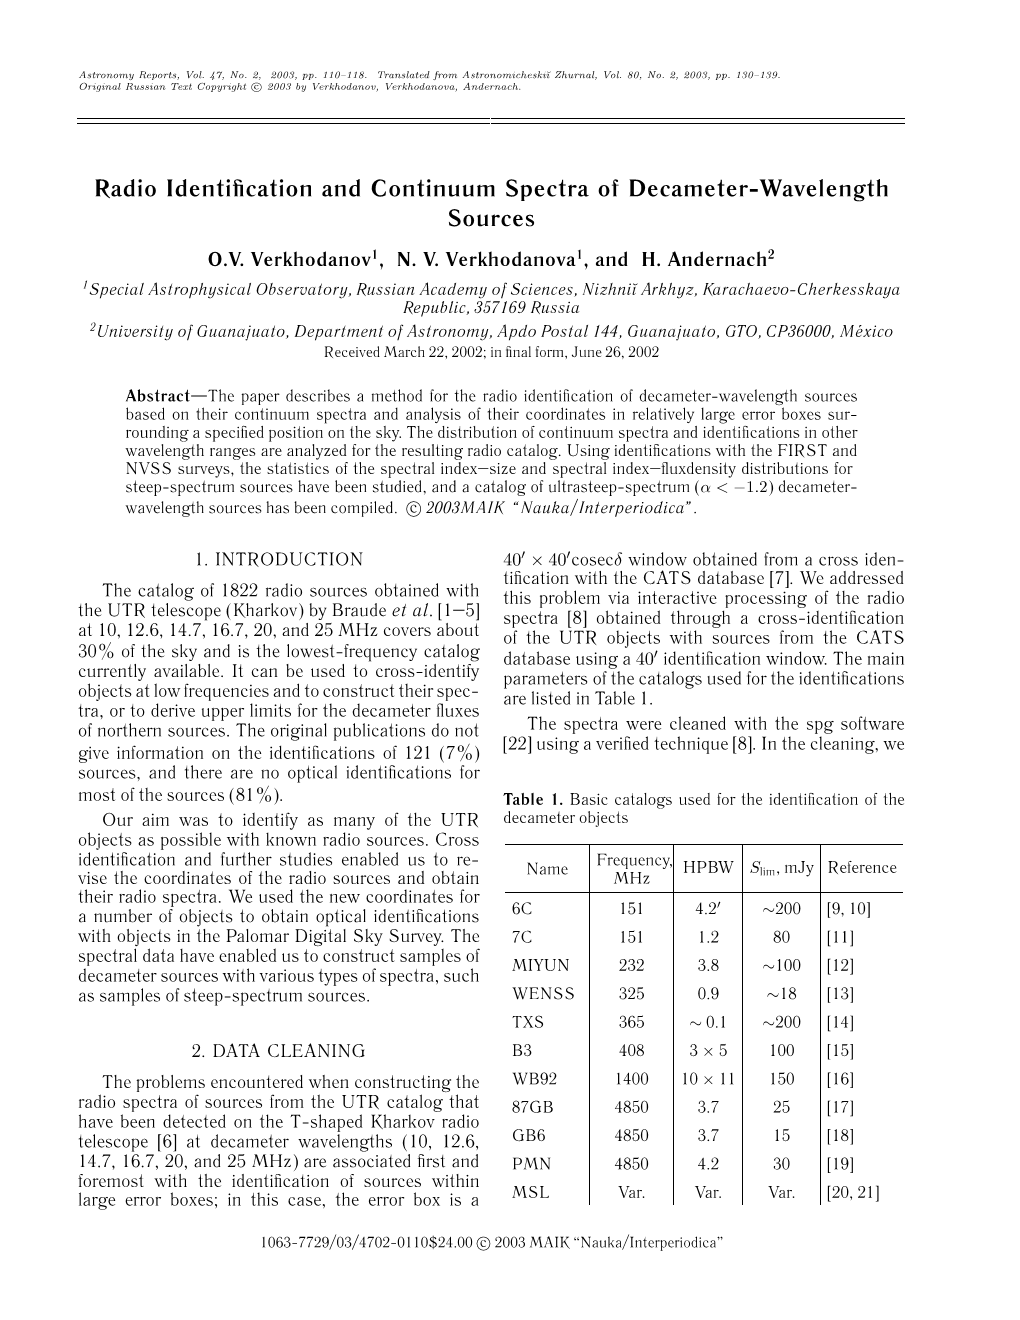 Radio Identification and Continuum Spectra of Decameter-Wavelength